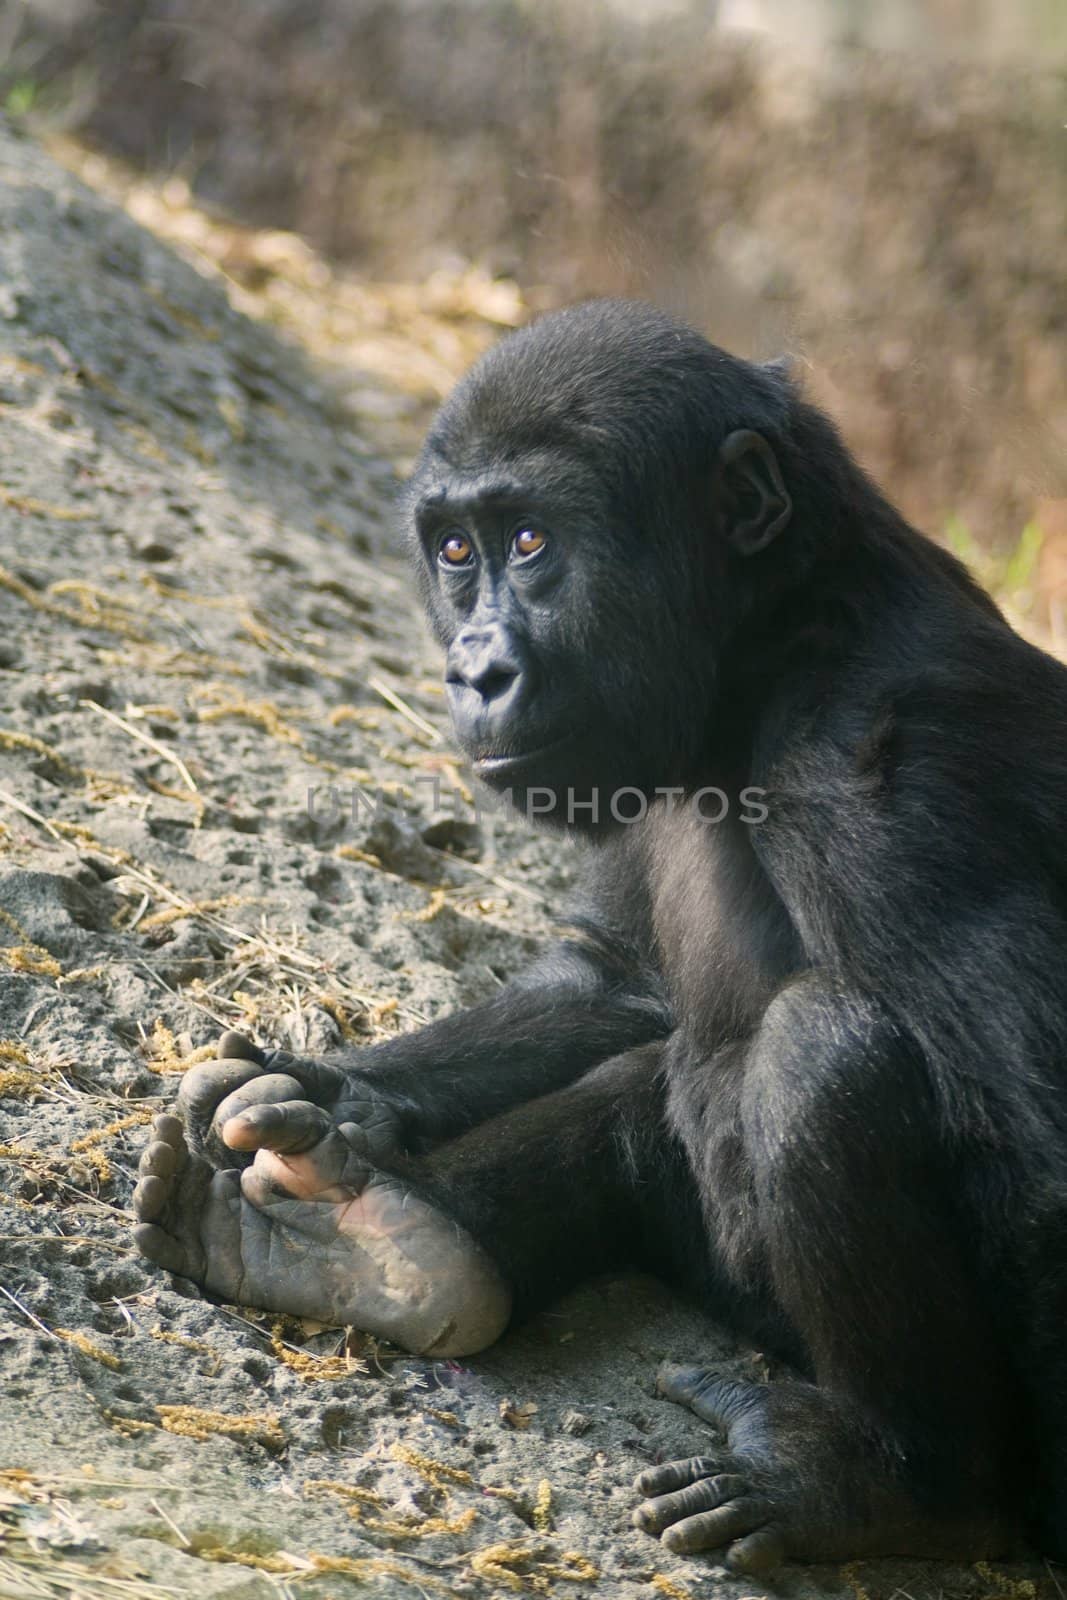 a baby gorilla sitting on the ground